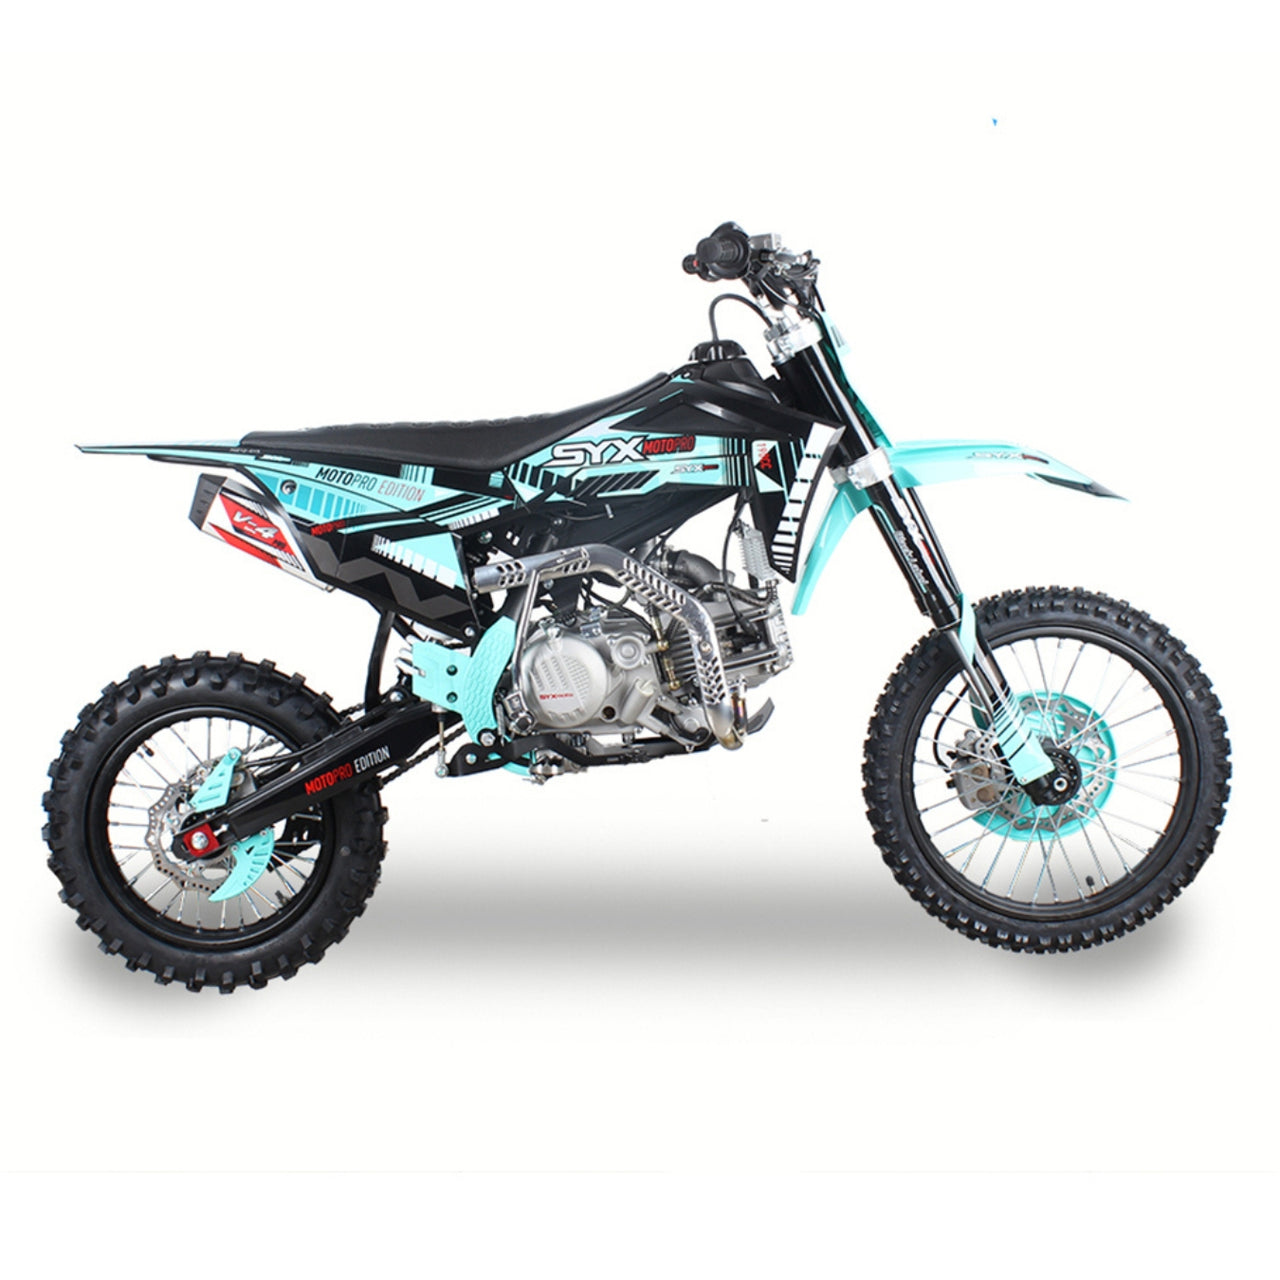 SYX Moto Pro 190cc Dirt Bike